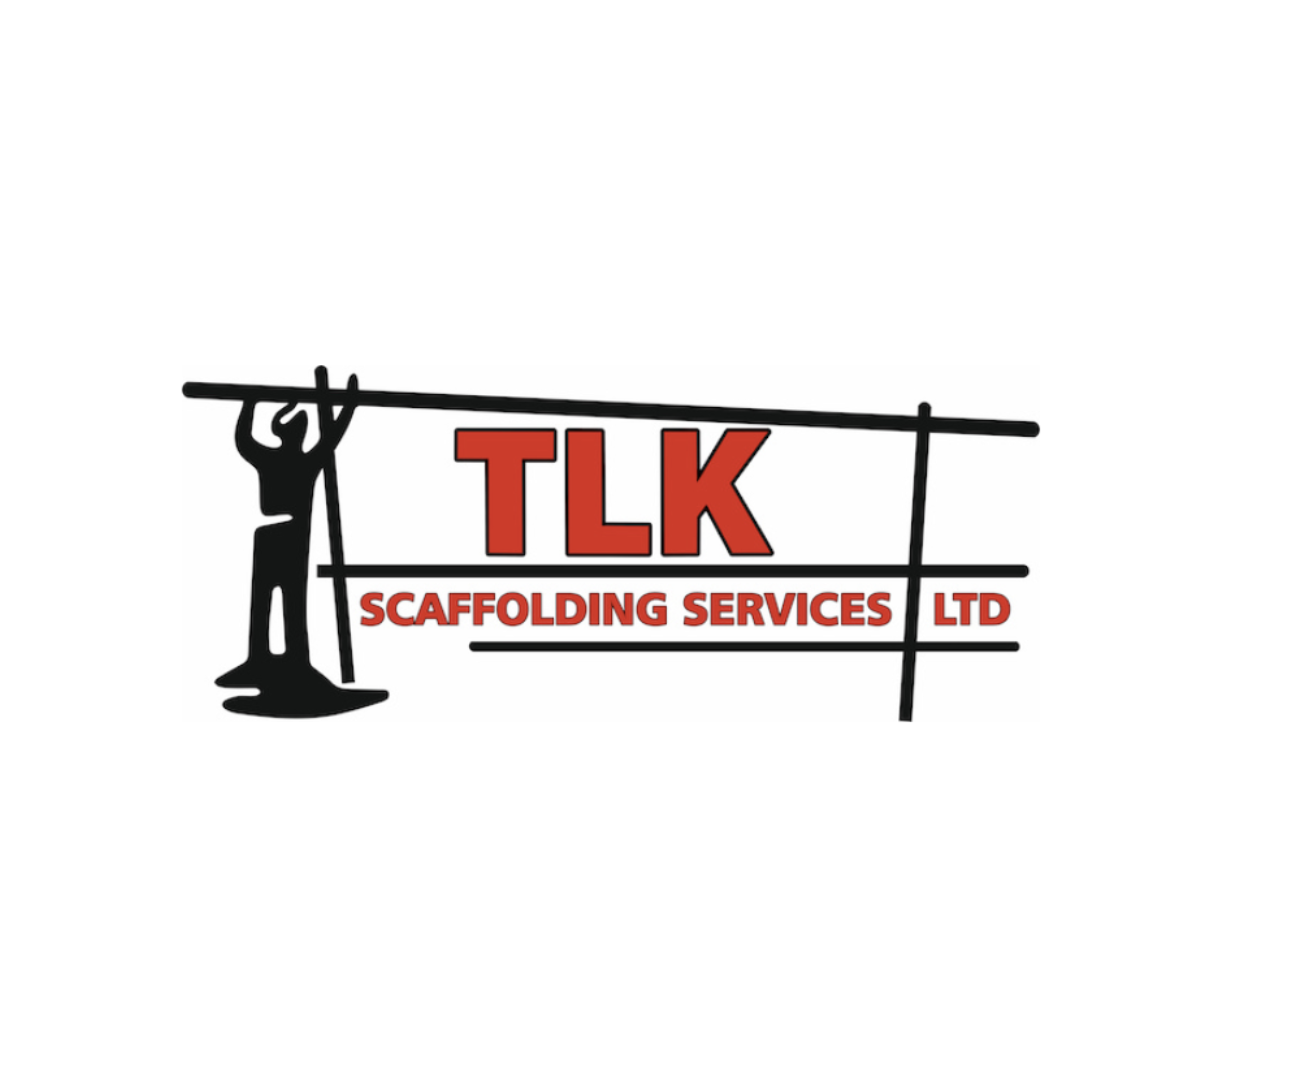 TLK Scaffolding Services Ltd